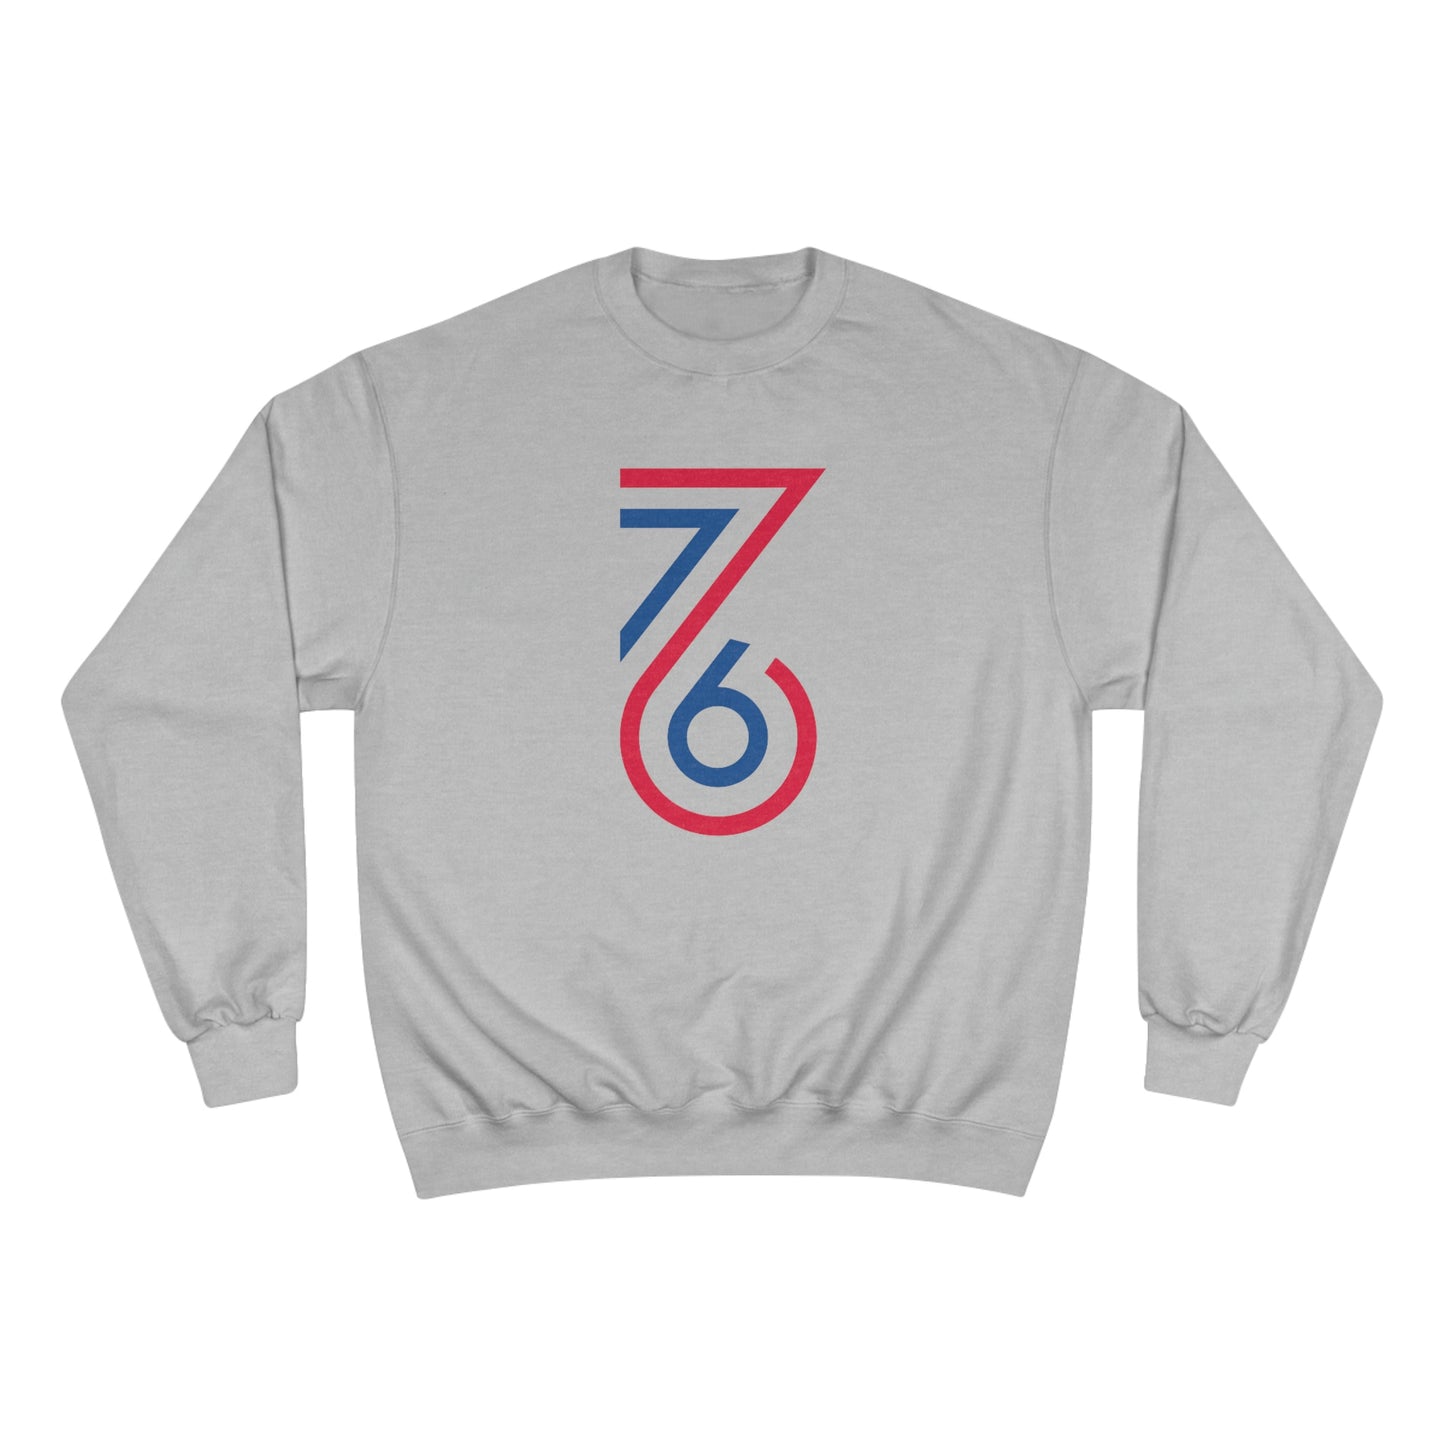 76 Champion® Sweatshirt